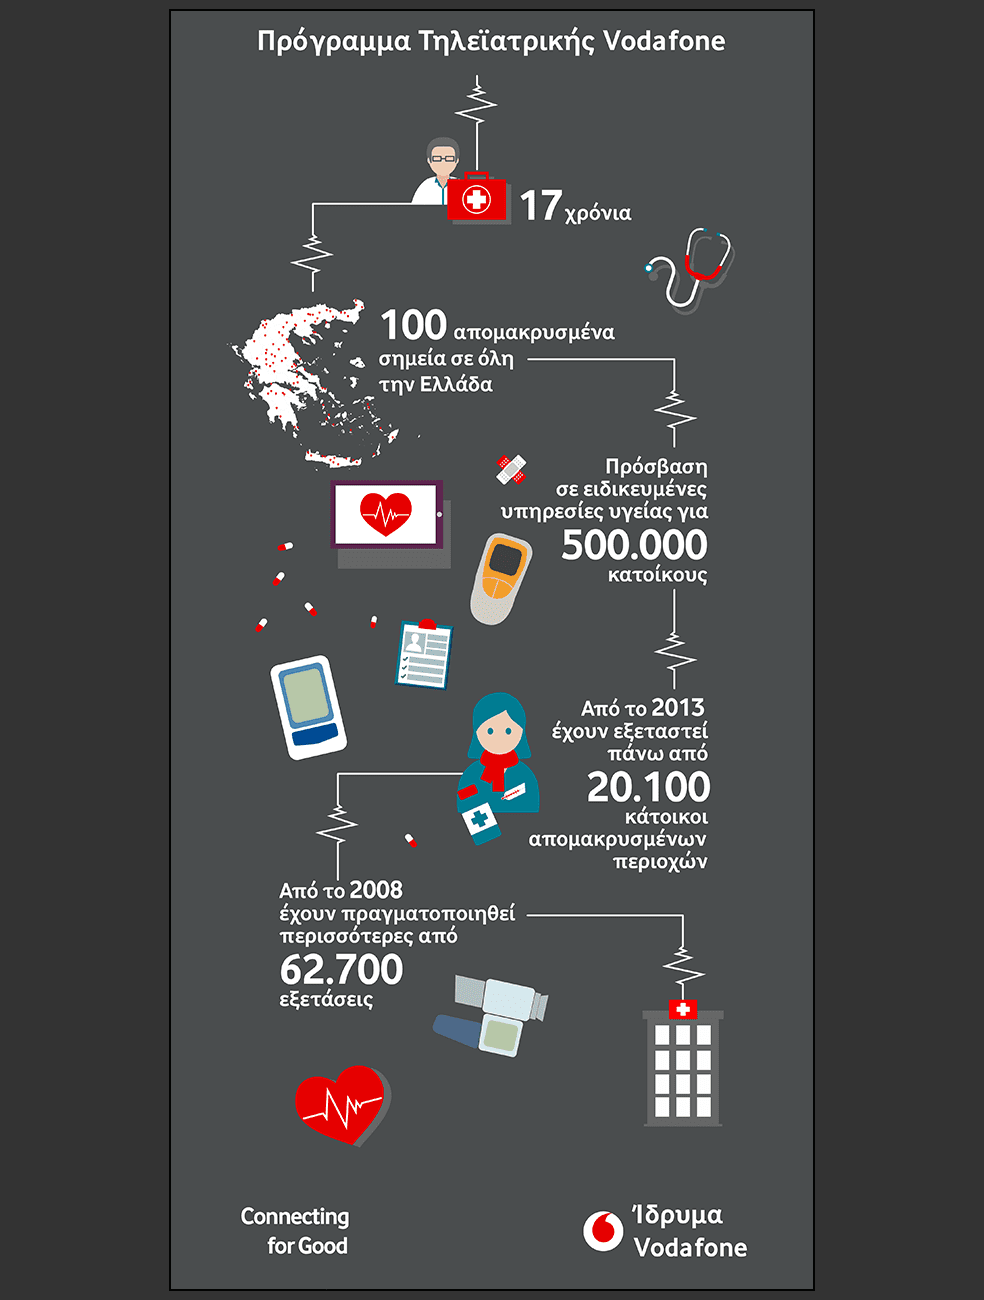 IMG - Πρόγραμμα Τηλεϊατρικής Vodafone